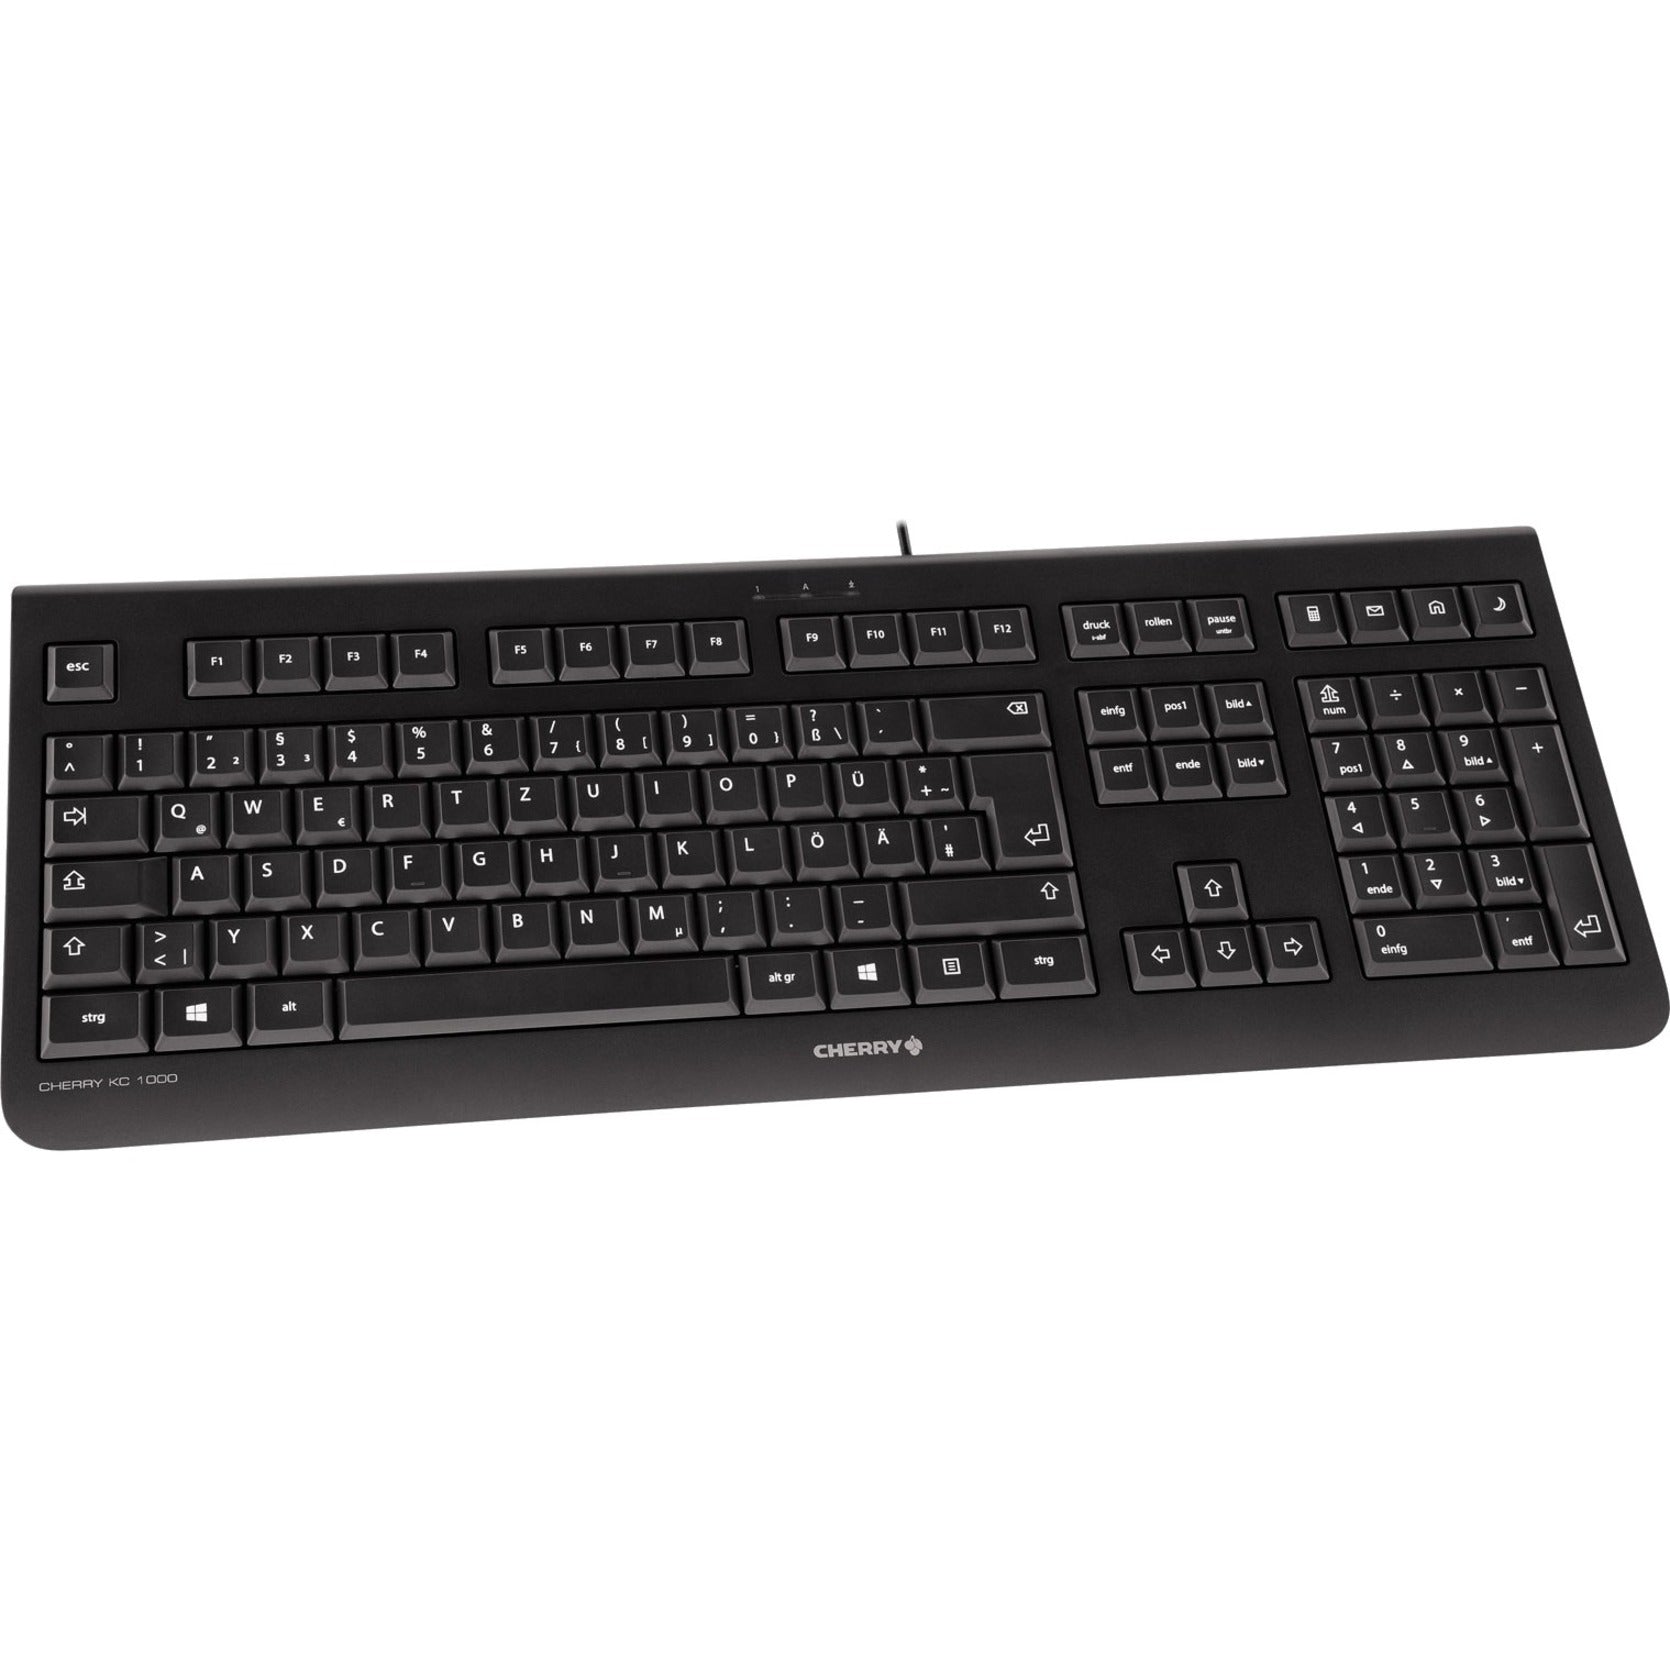 CHERRY JK-0800GB-2 KC 1000 Keyboard, Quiet Keys, LED Indicator, Wear Resistant